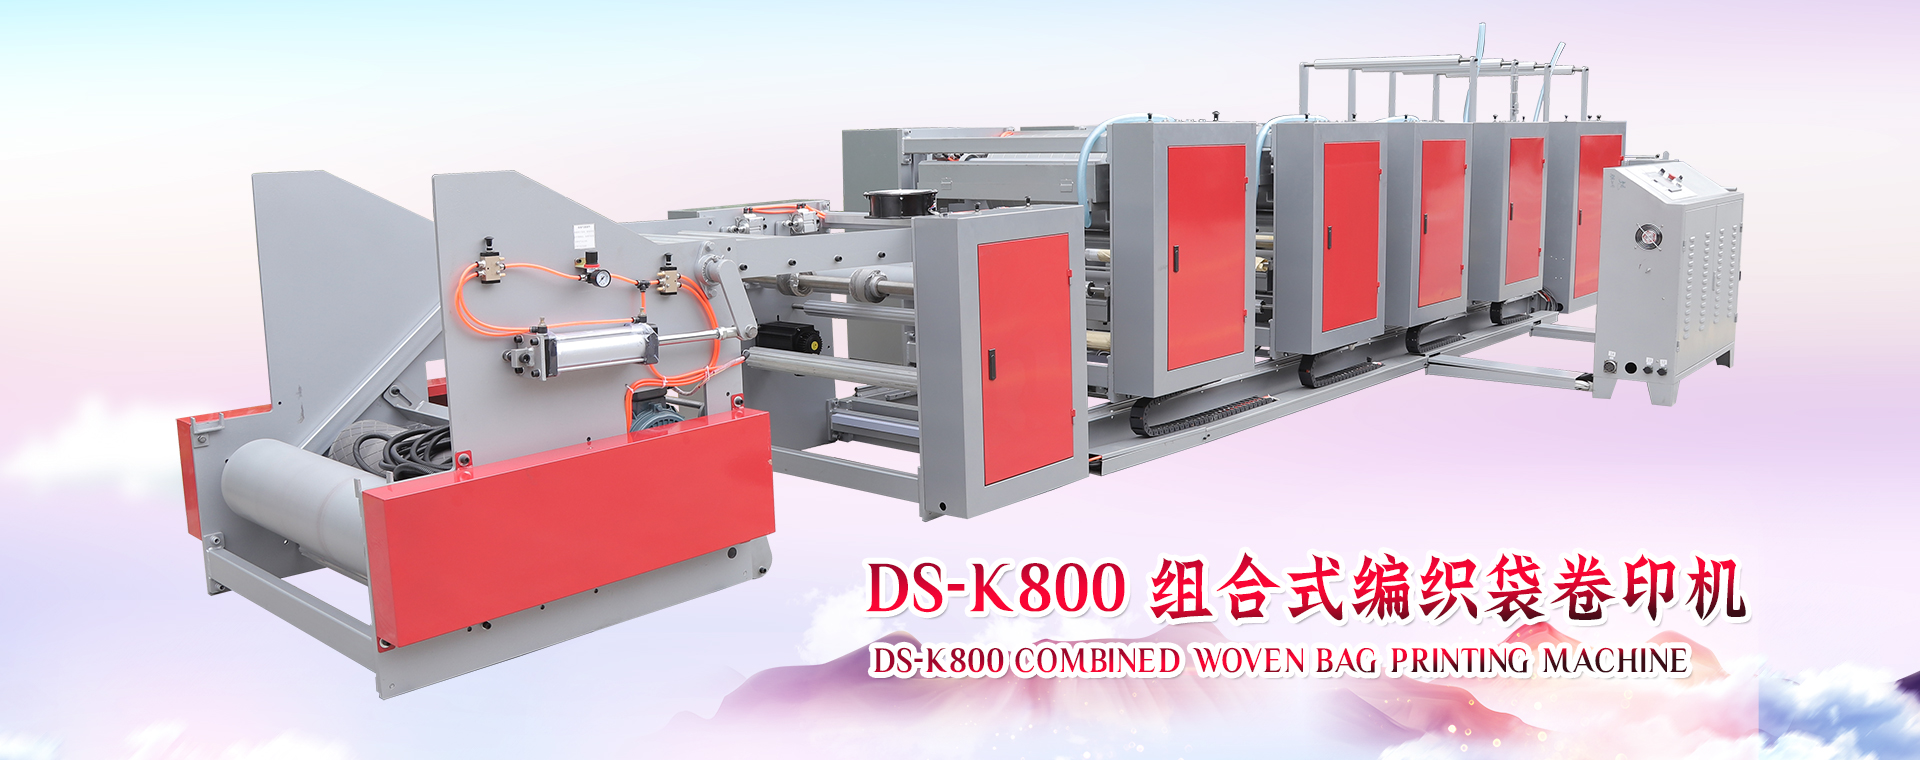 DS-K800 组合式编织袋卷印机